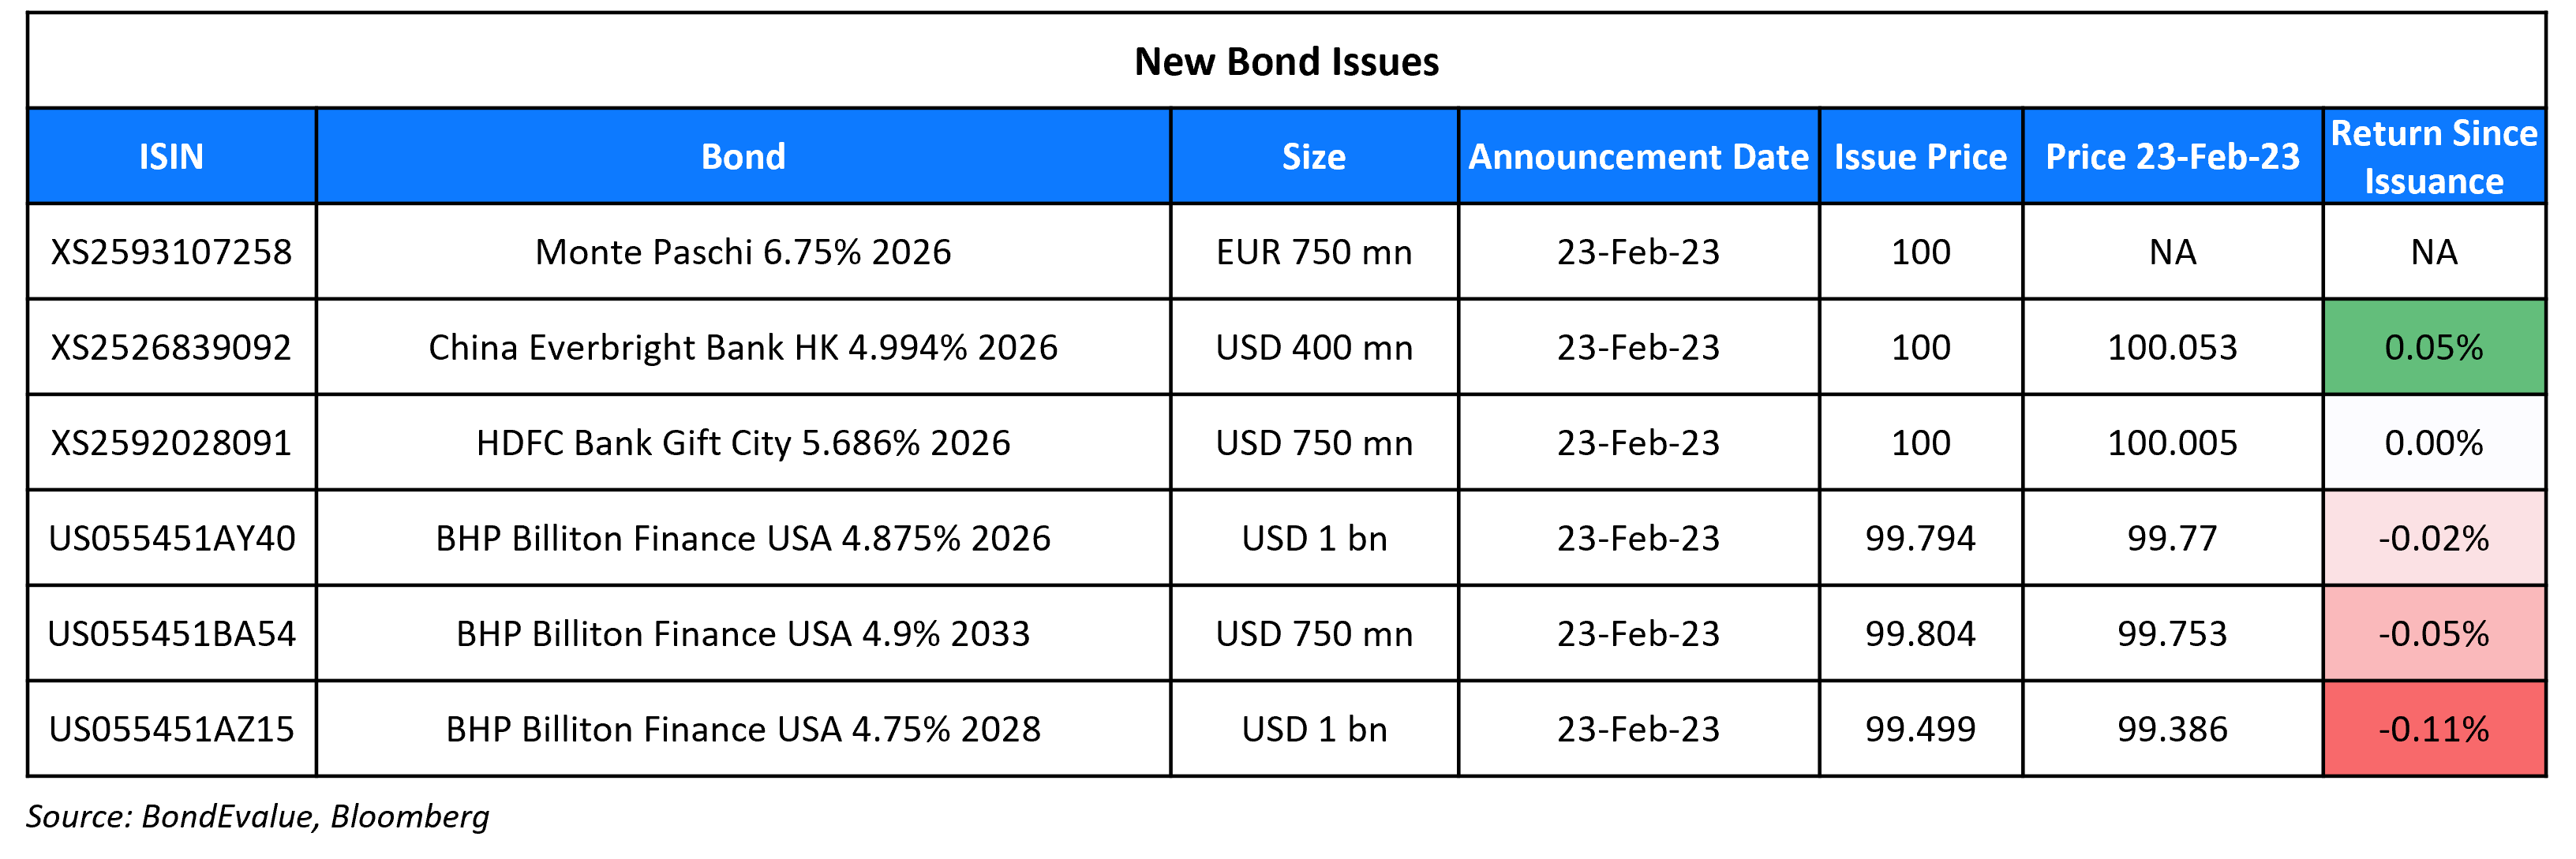 New Bond Issues 24 Feb 23